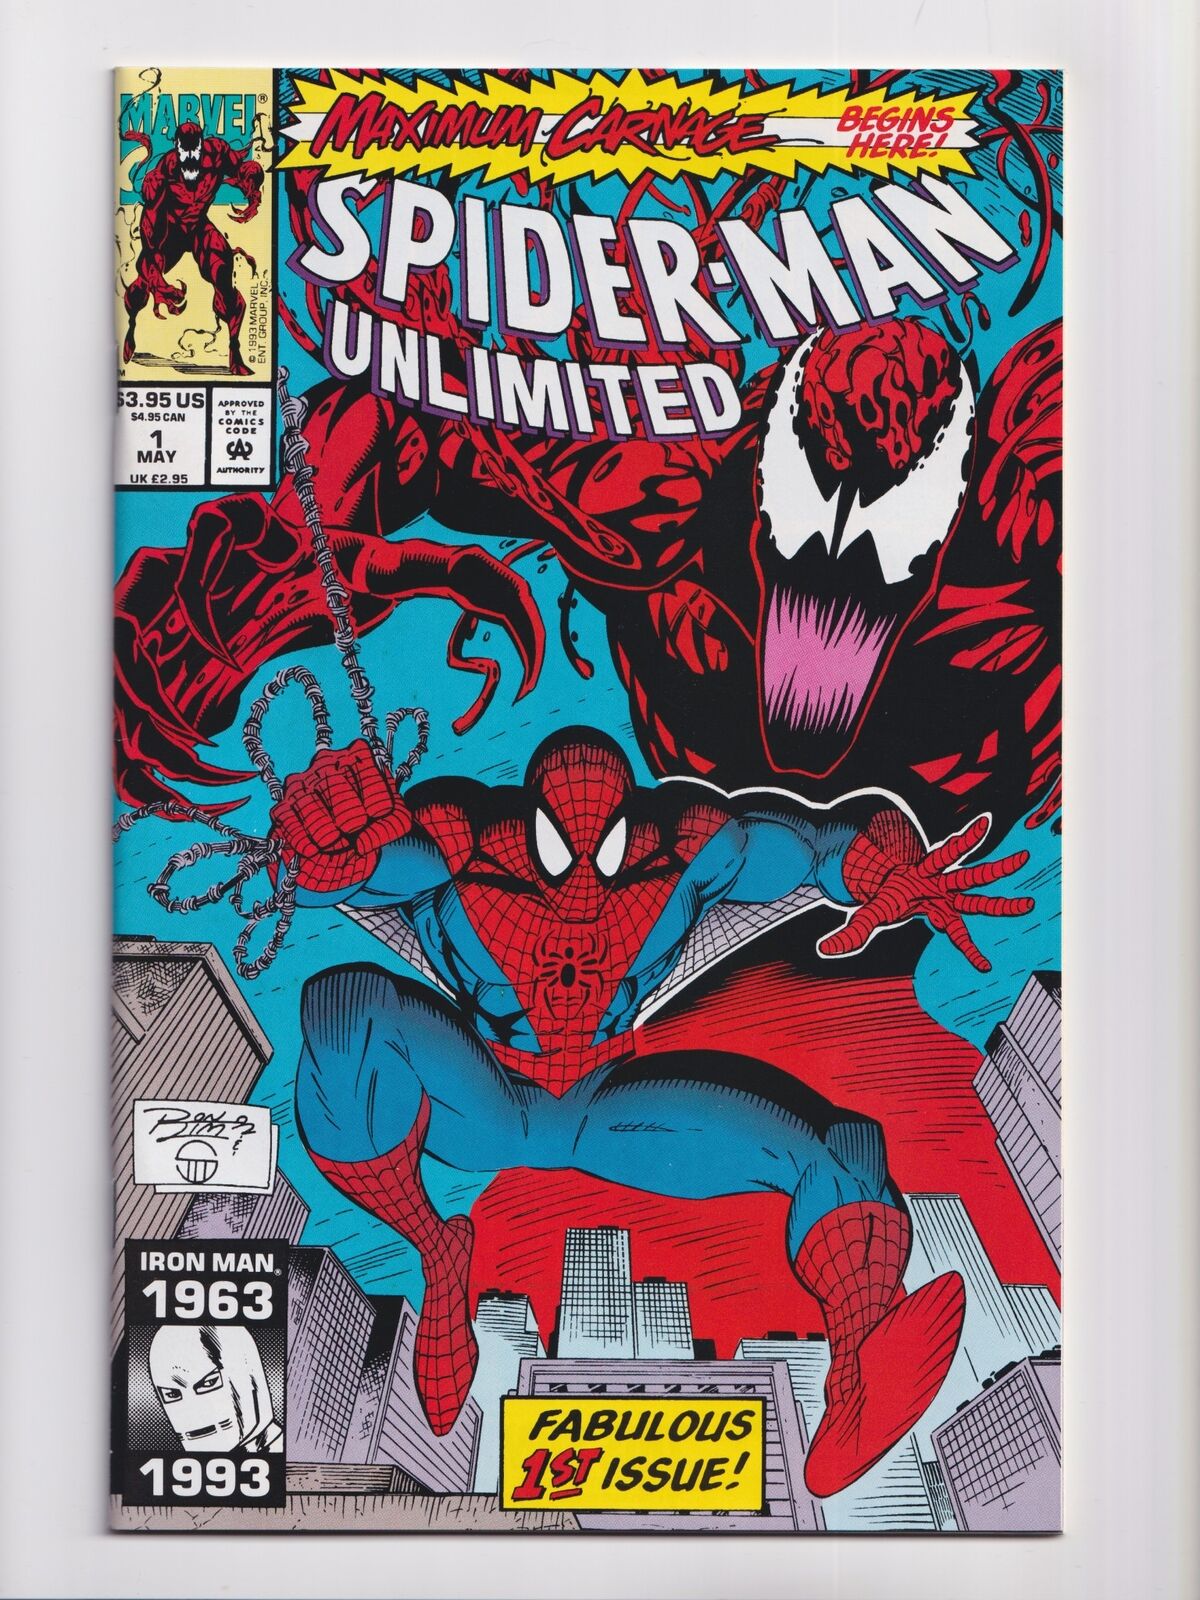 Spider-Man Unlimited #1 Marvel Comics 1993 Maximum Carnage Begins NM+